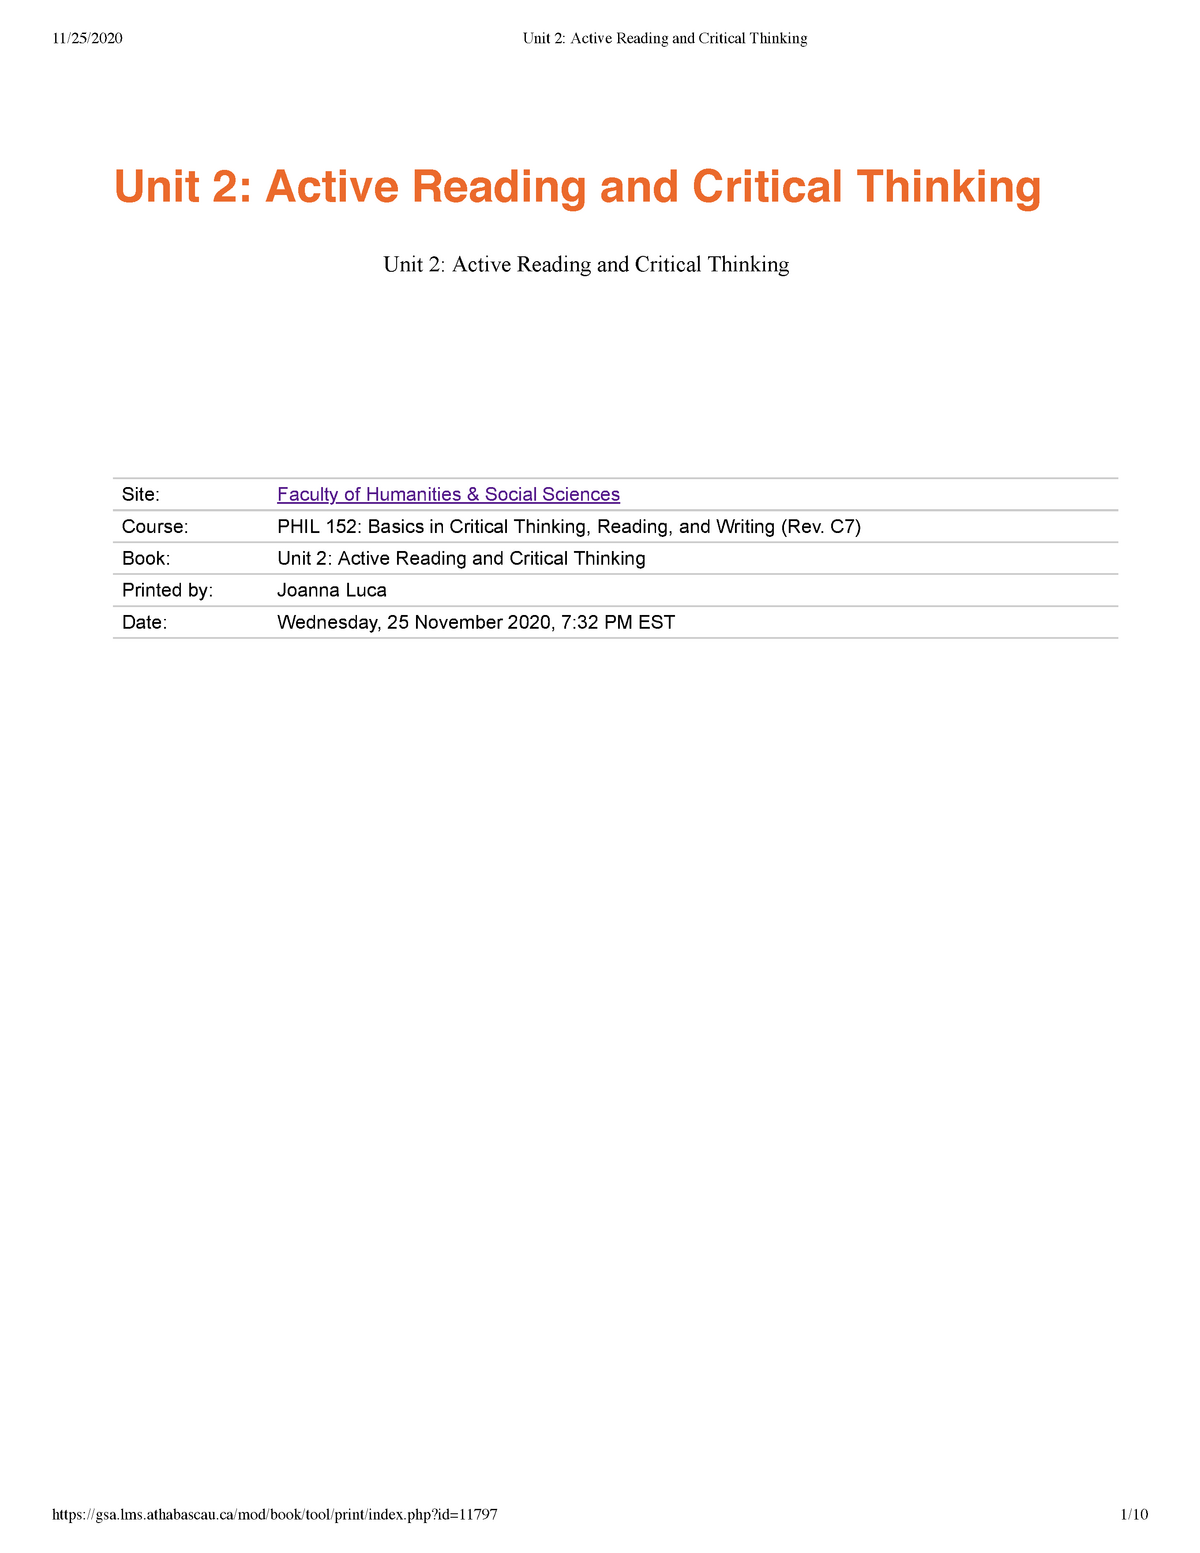 ocr critical thinking unit 2